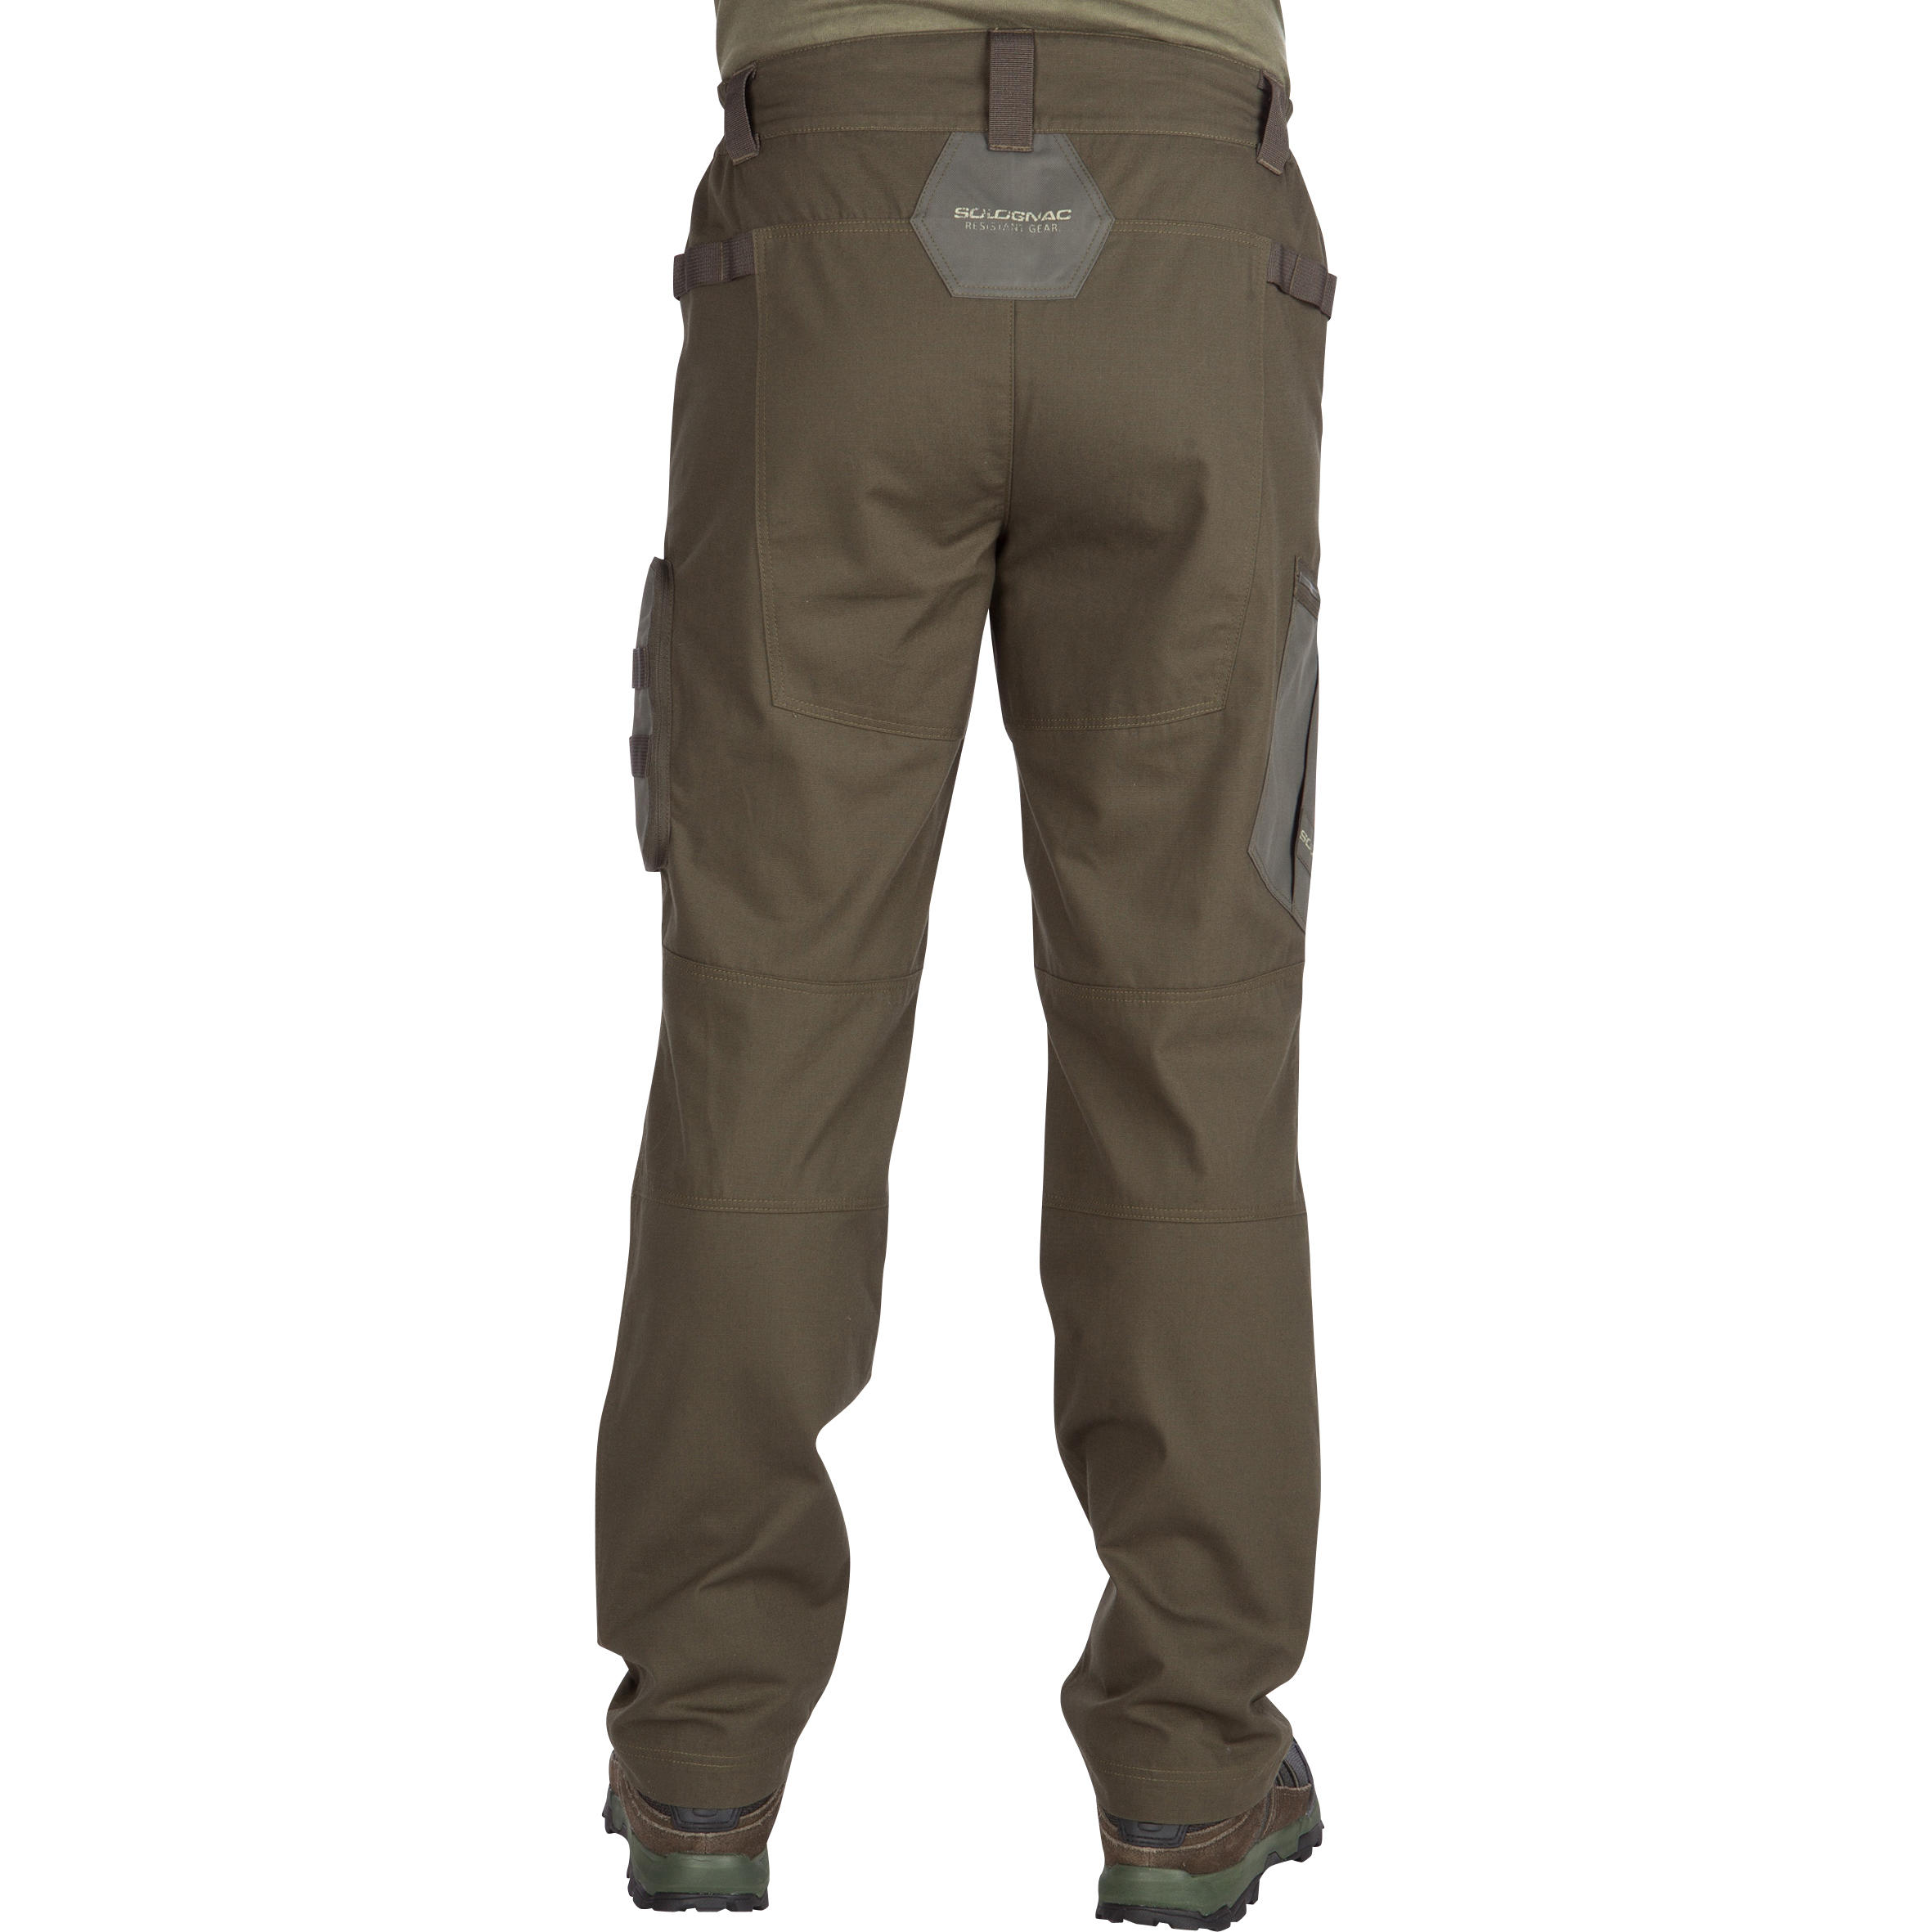 Buy Street Studio Men's Hiking Trousers Regular Fit- Decathlon Cargo- Dark  Grey Color (3XL) Size Numerical Value: 40 at Amazon.in